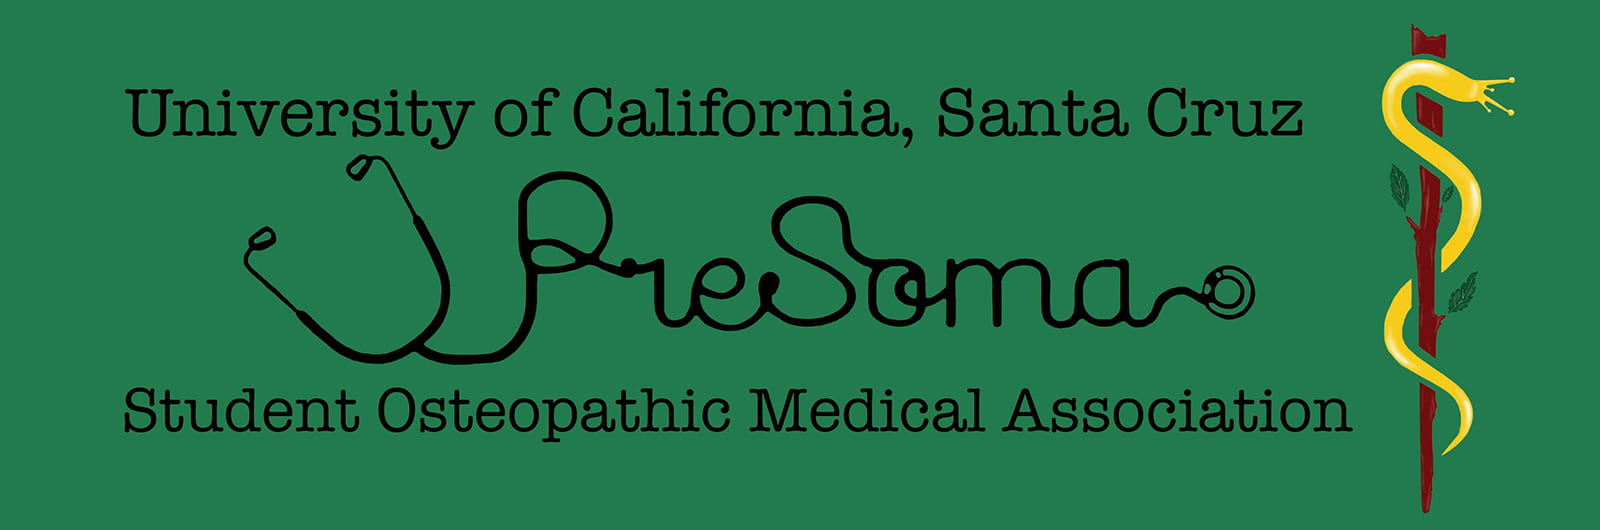 Banner reads "University of California, Santa Cruz, PreSoma, Student Osteopathic Medical Association." 